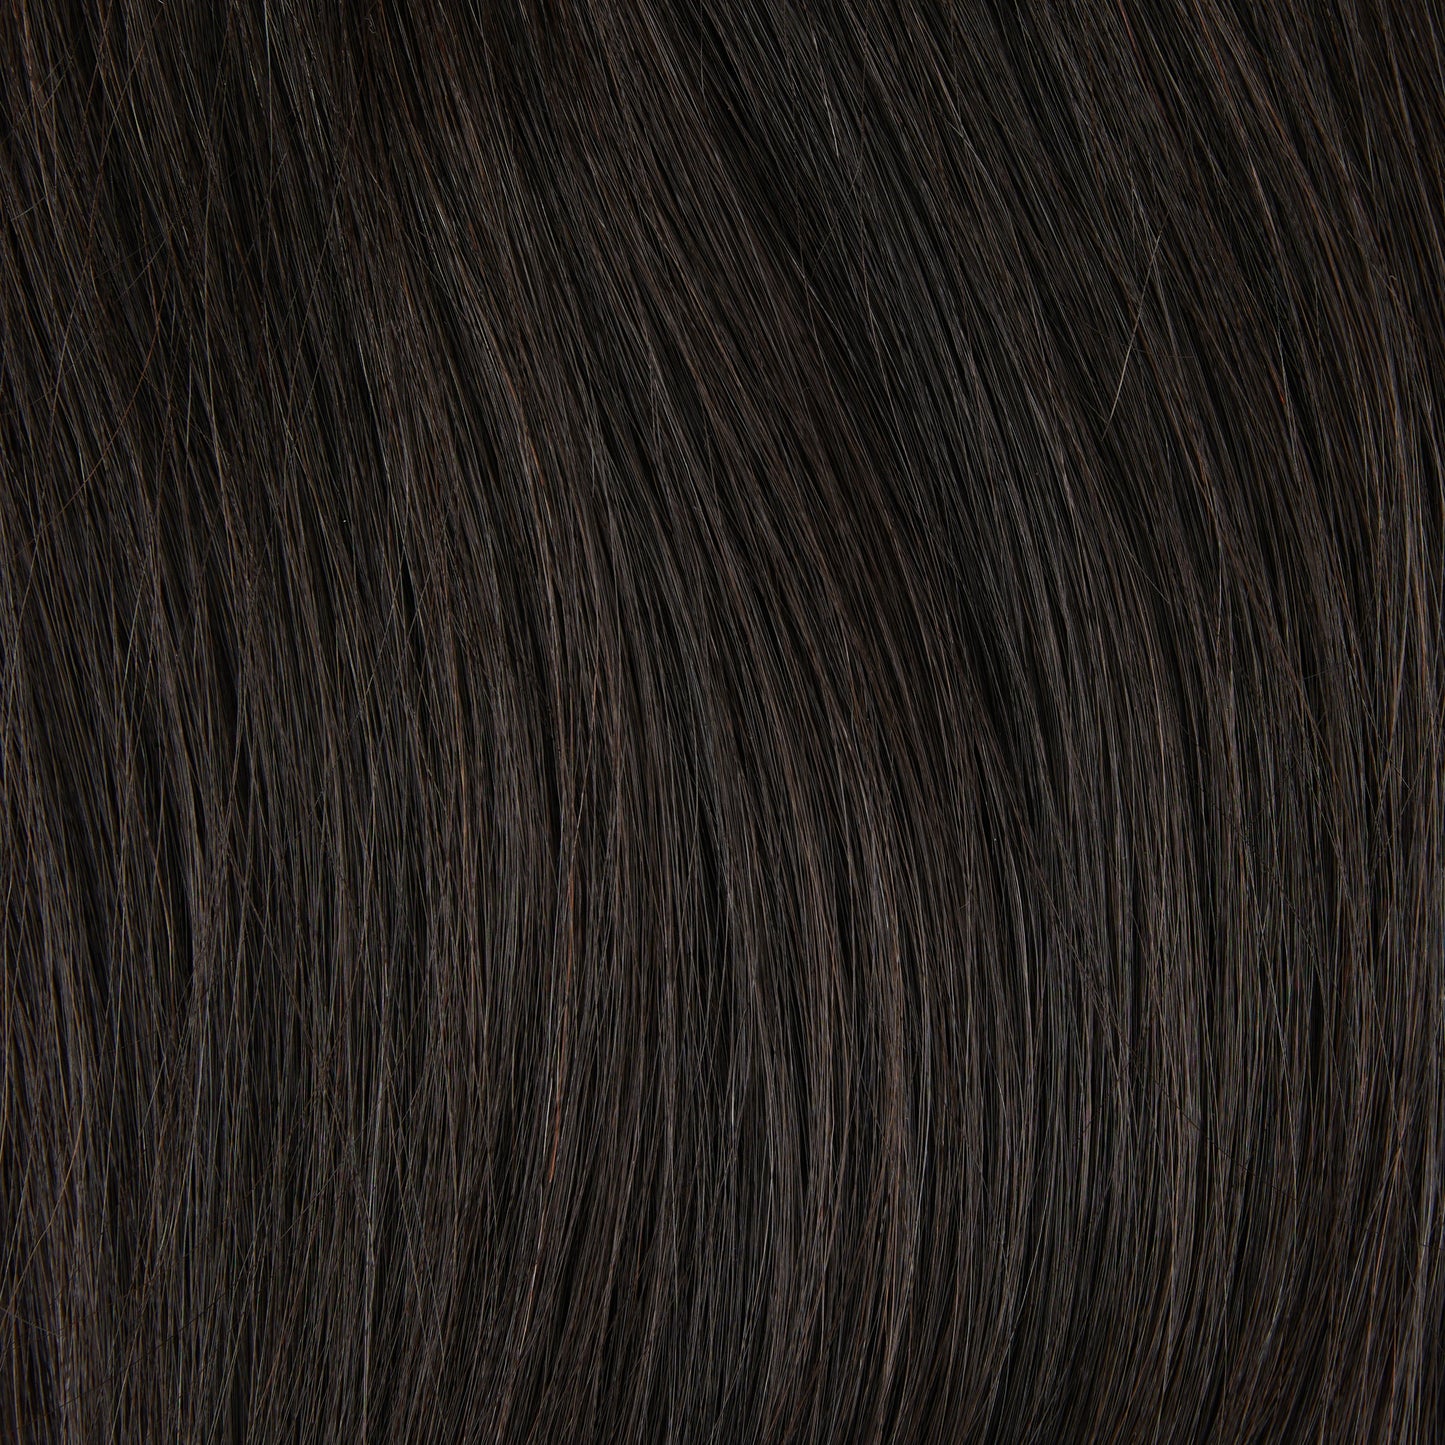 Darkest Brown #1 B Lace Wig